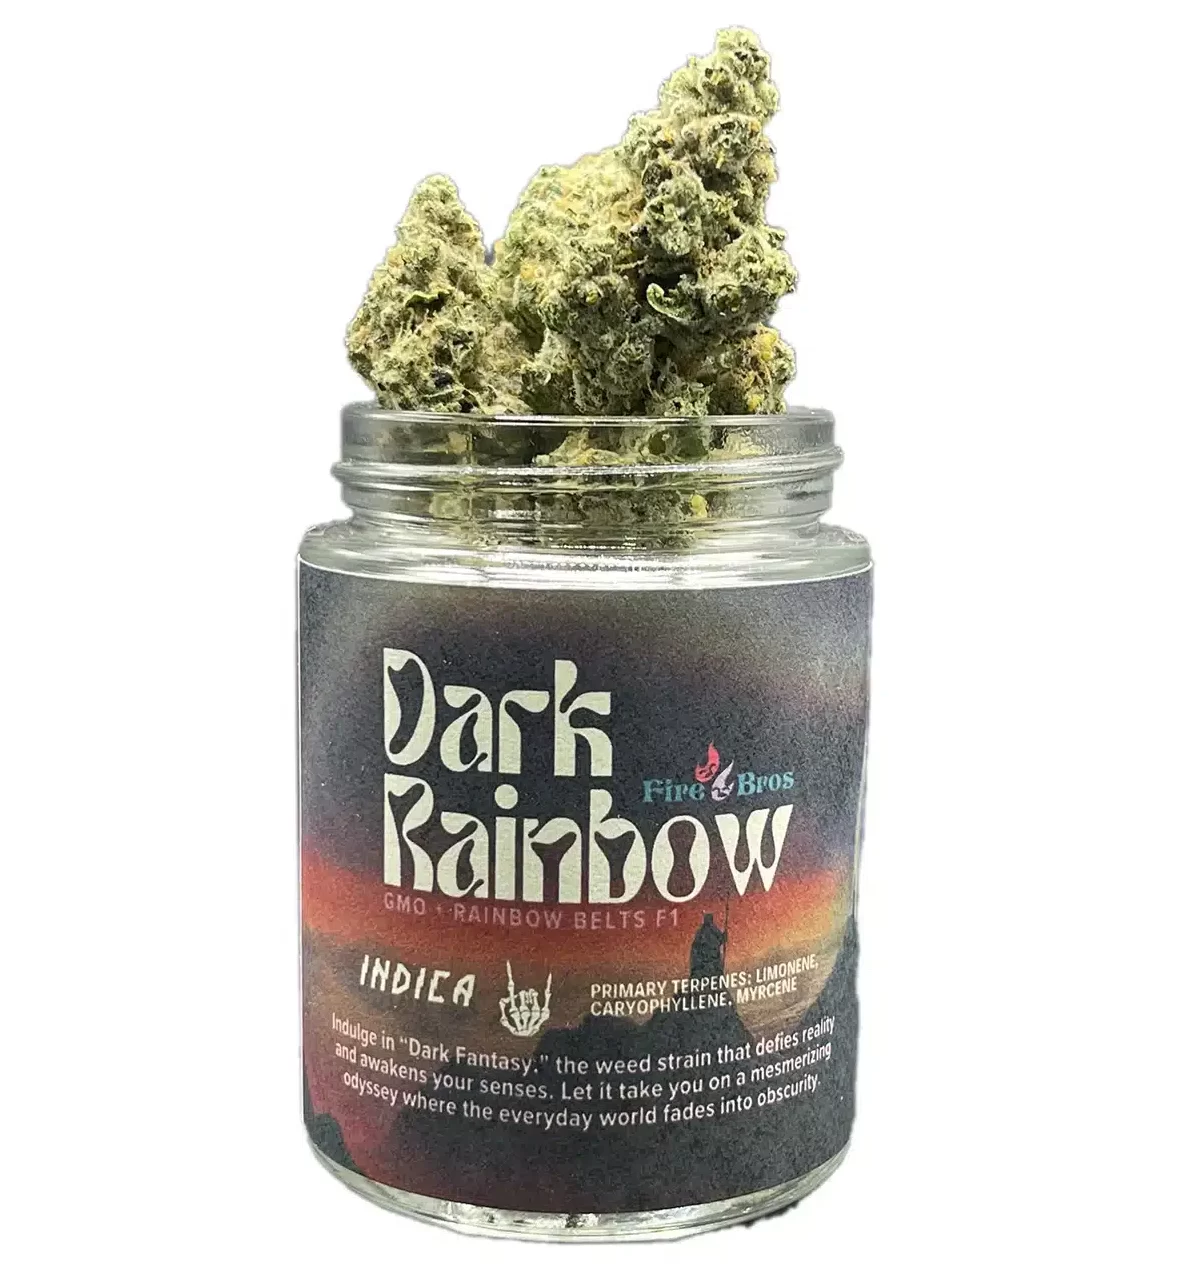 Dark Rainbow Cannabis Indica Weed Strain from Fire Bros